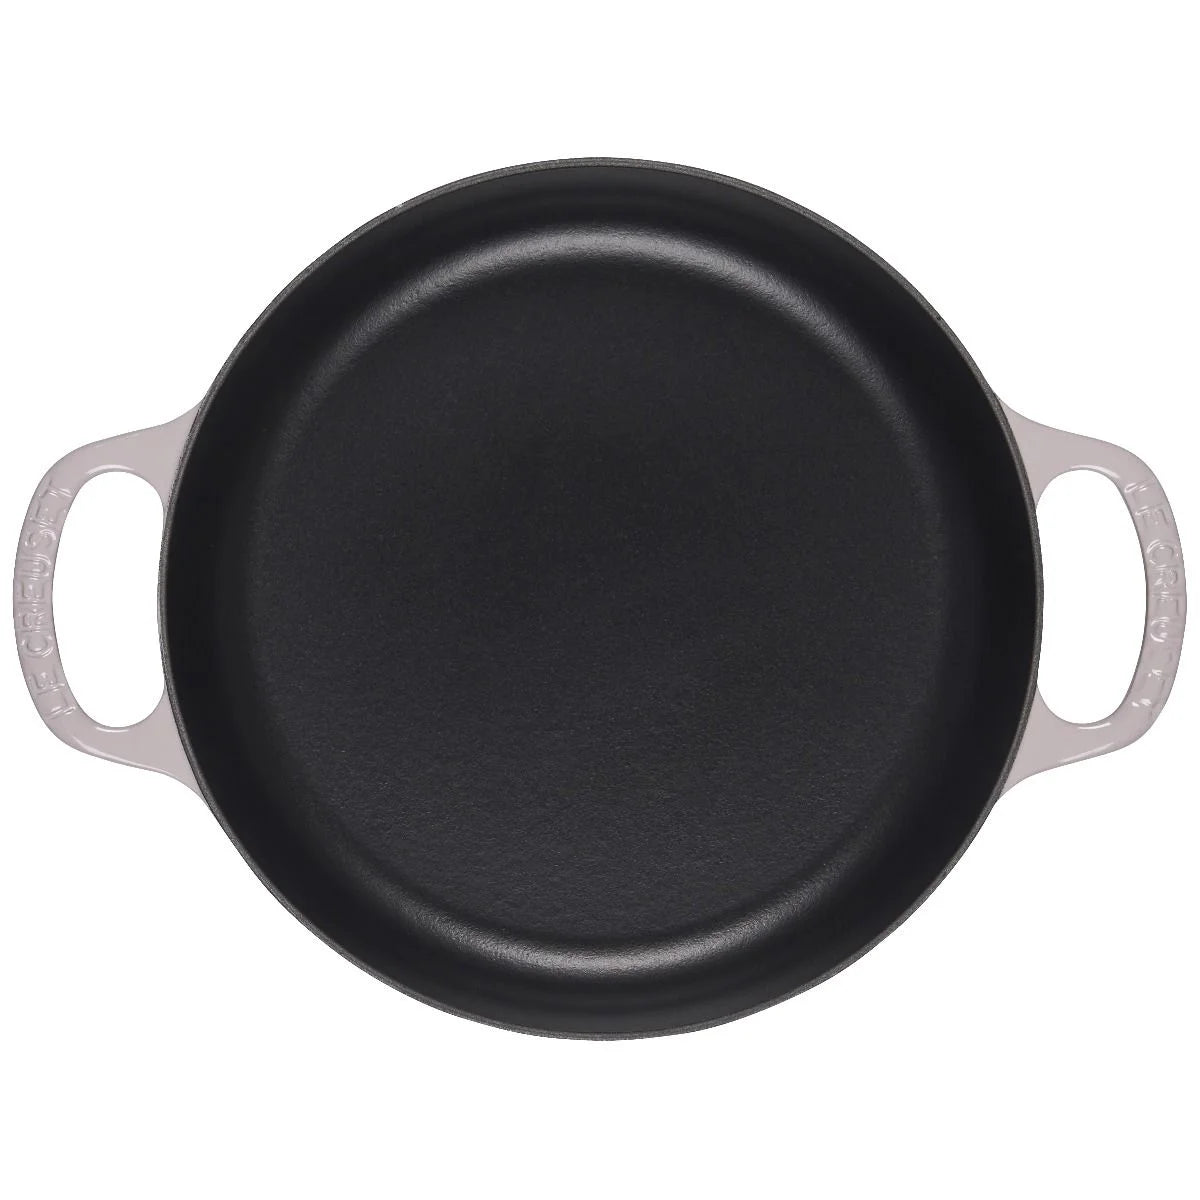 Le Creuset Signature Enameled Cast Iron Everyday Pan, 11-Inches, Shallot - Kitchen Universe